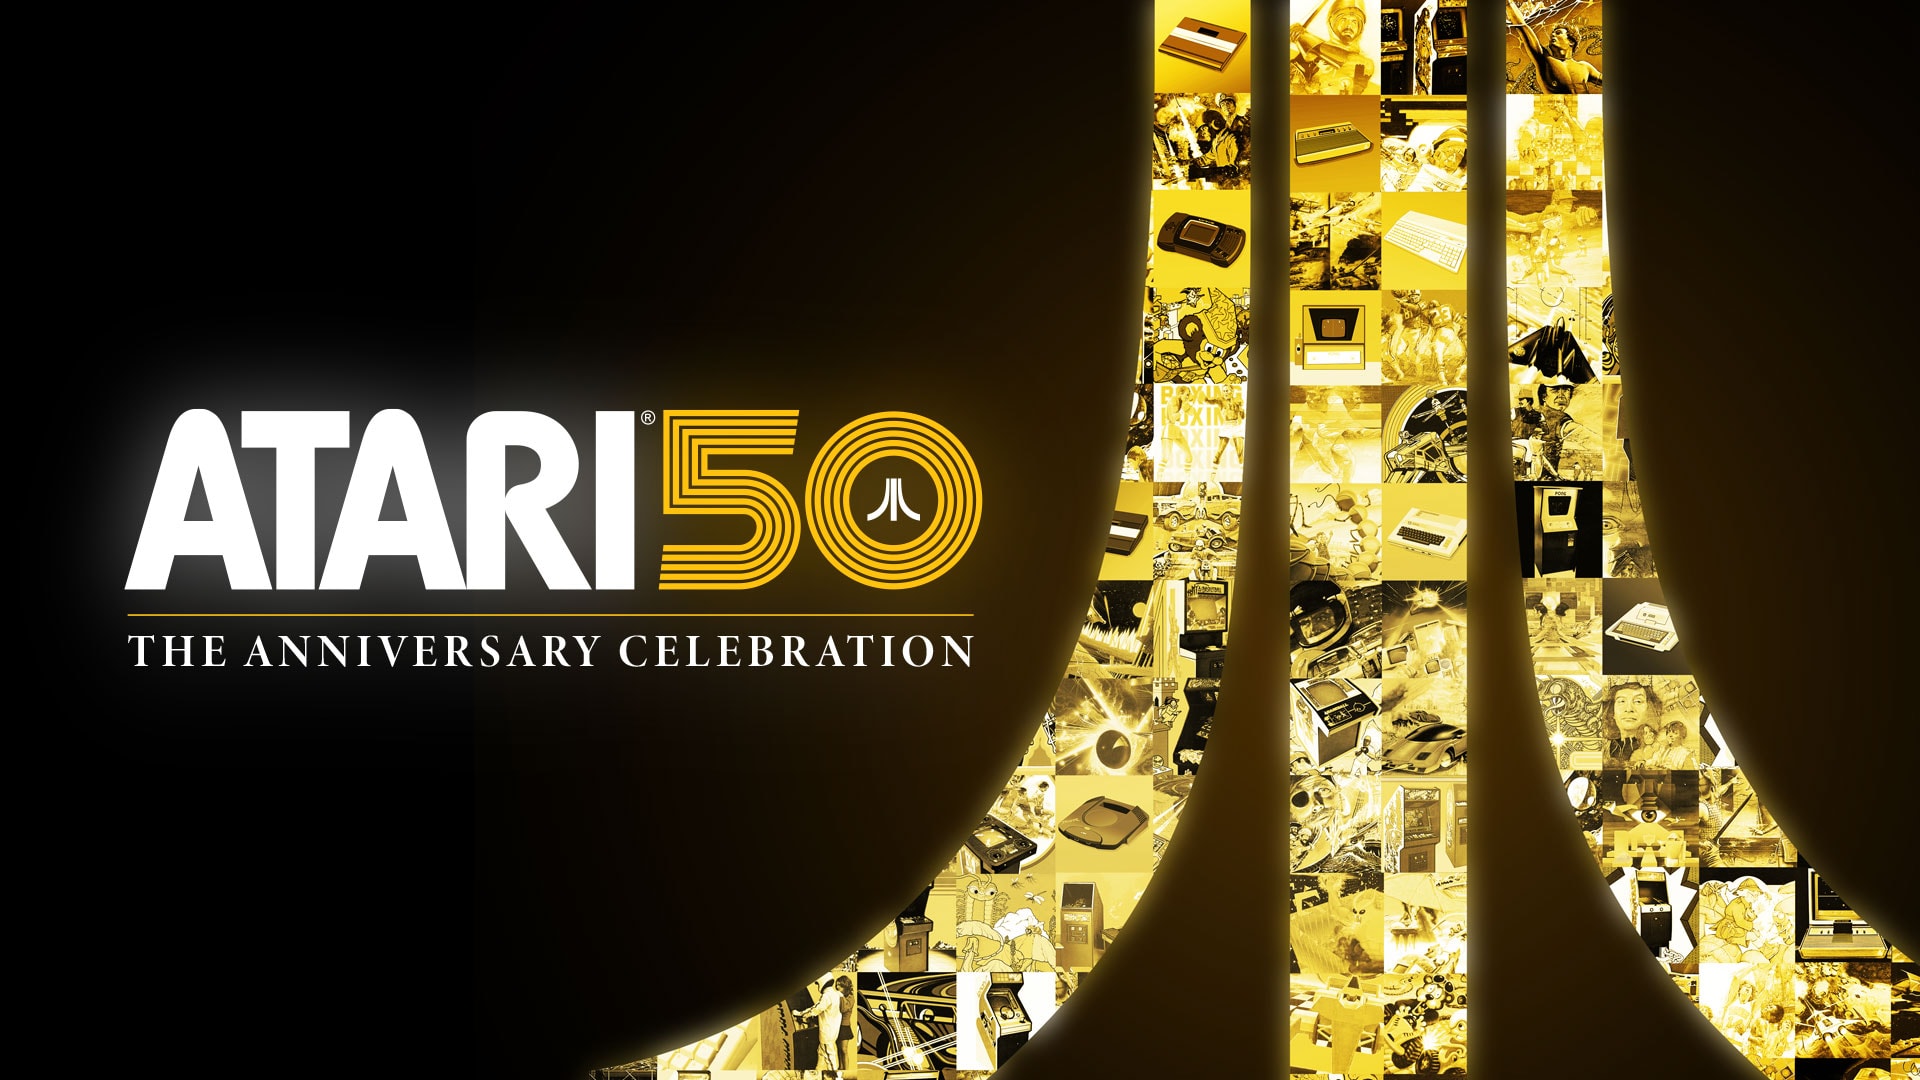 Atari 50: The Anniversary Celebration for Nintendo Switch 